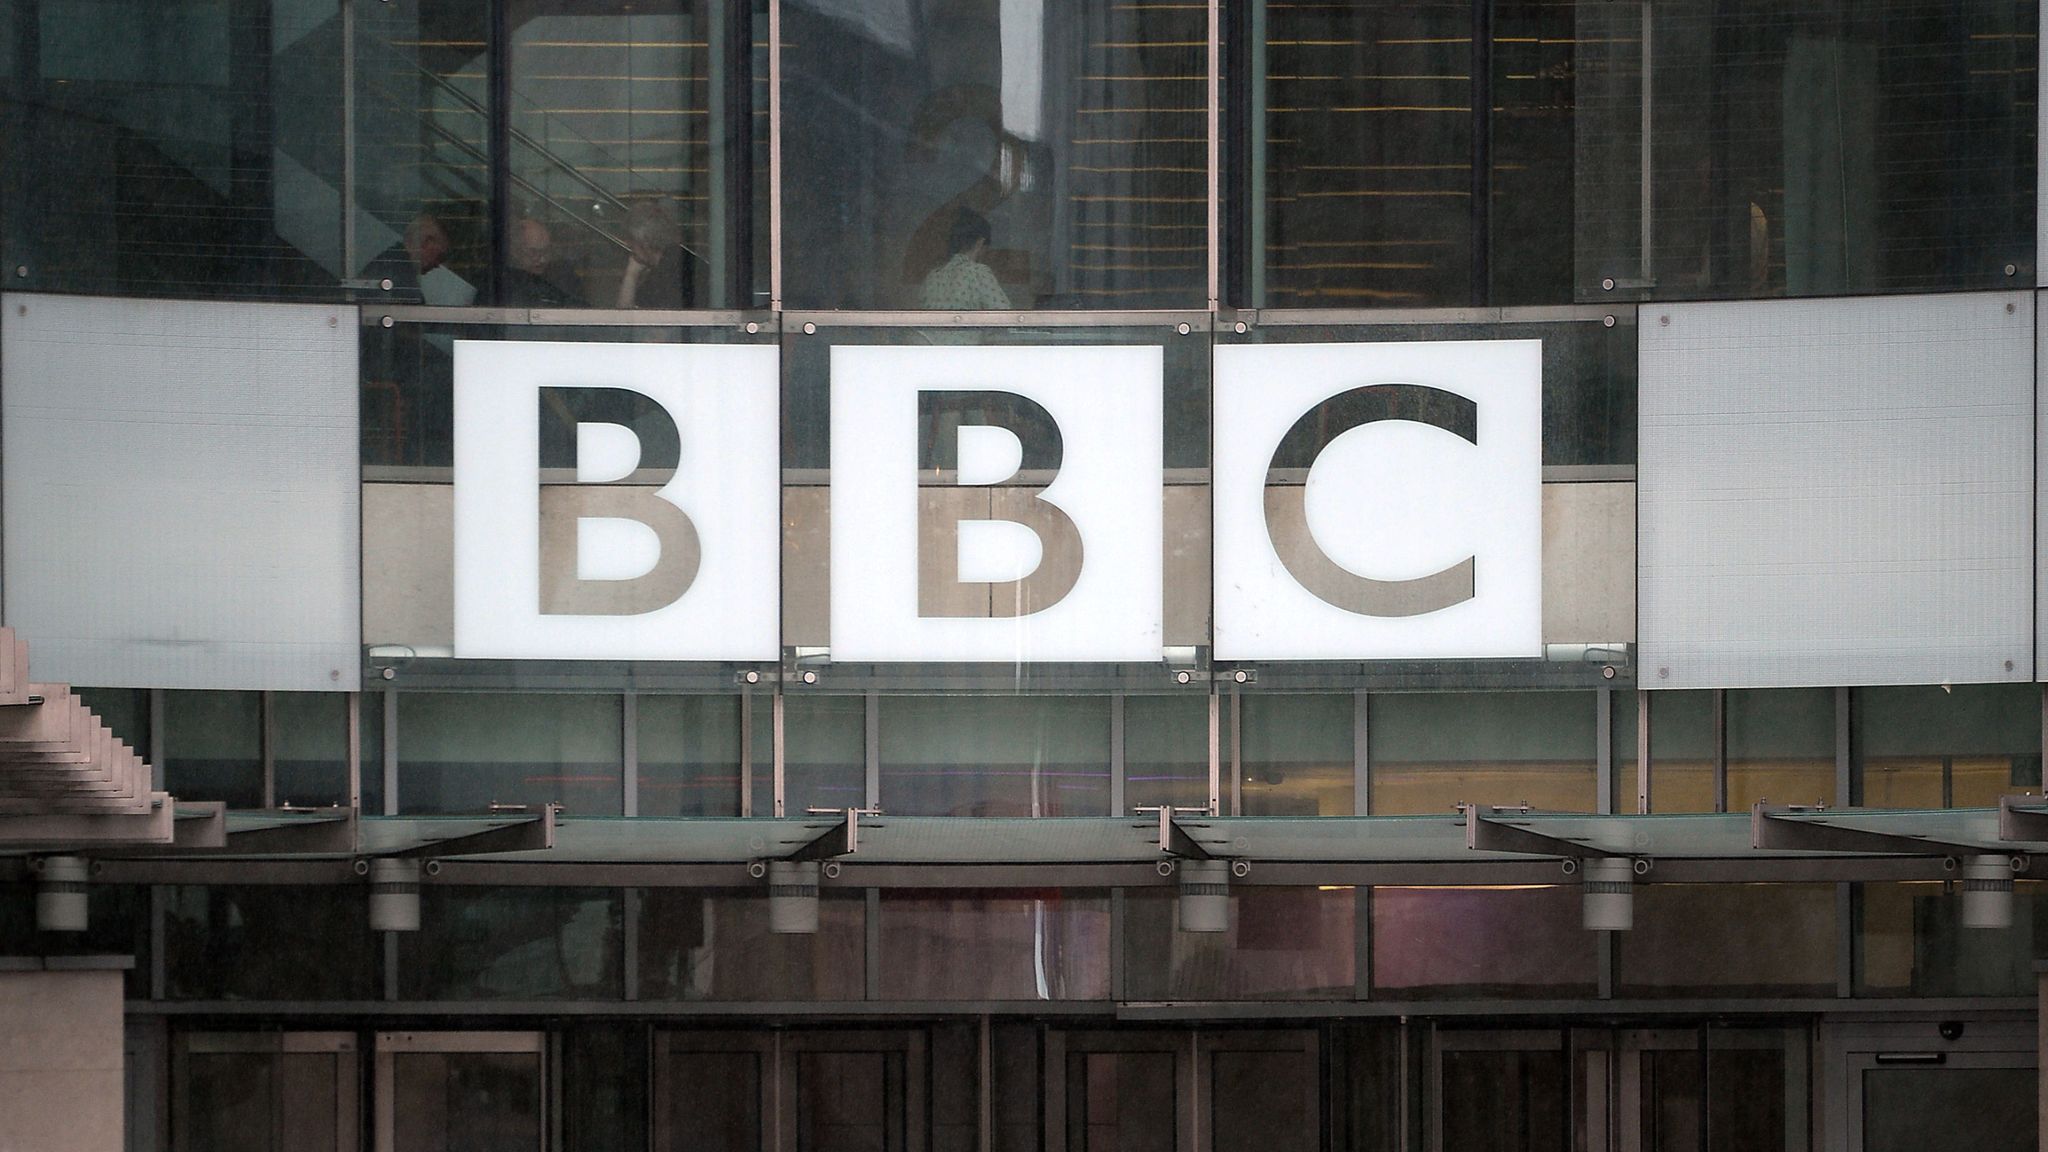 The myth bwc bbc